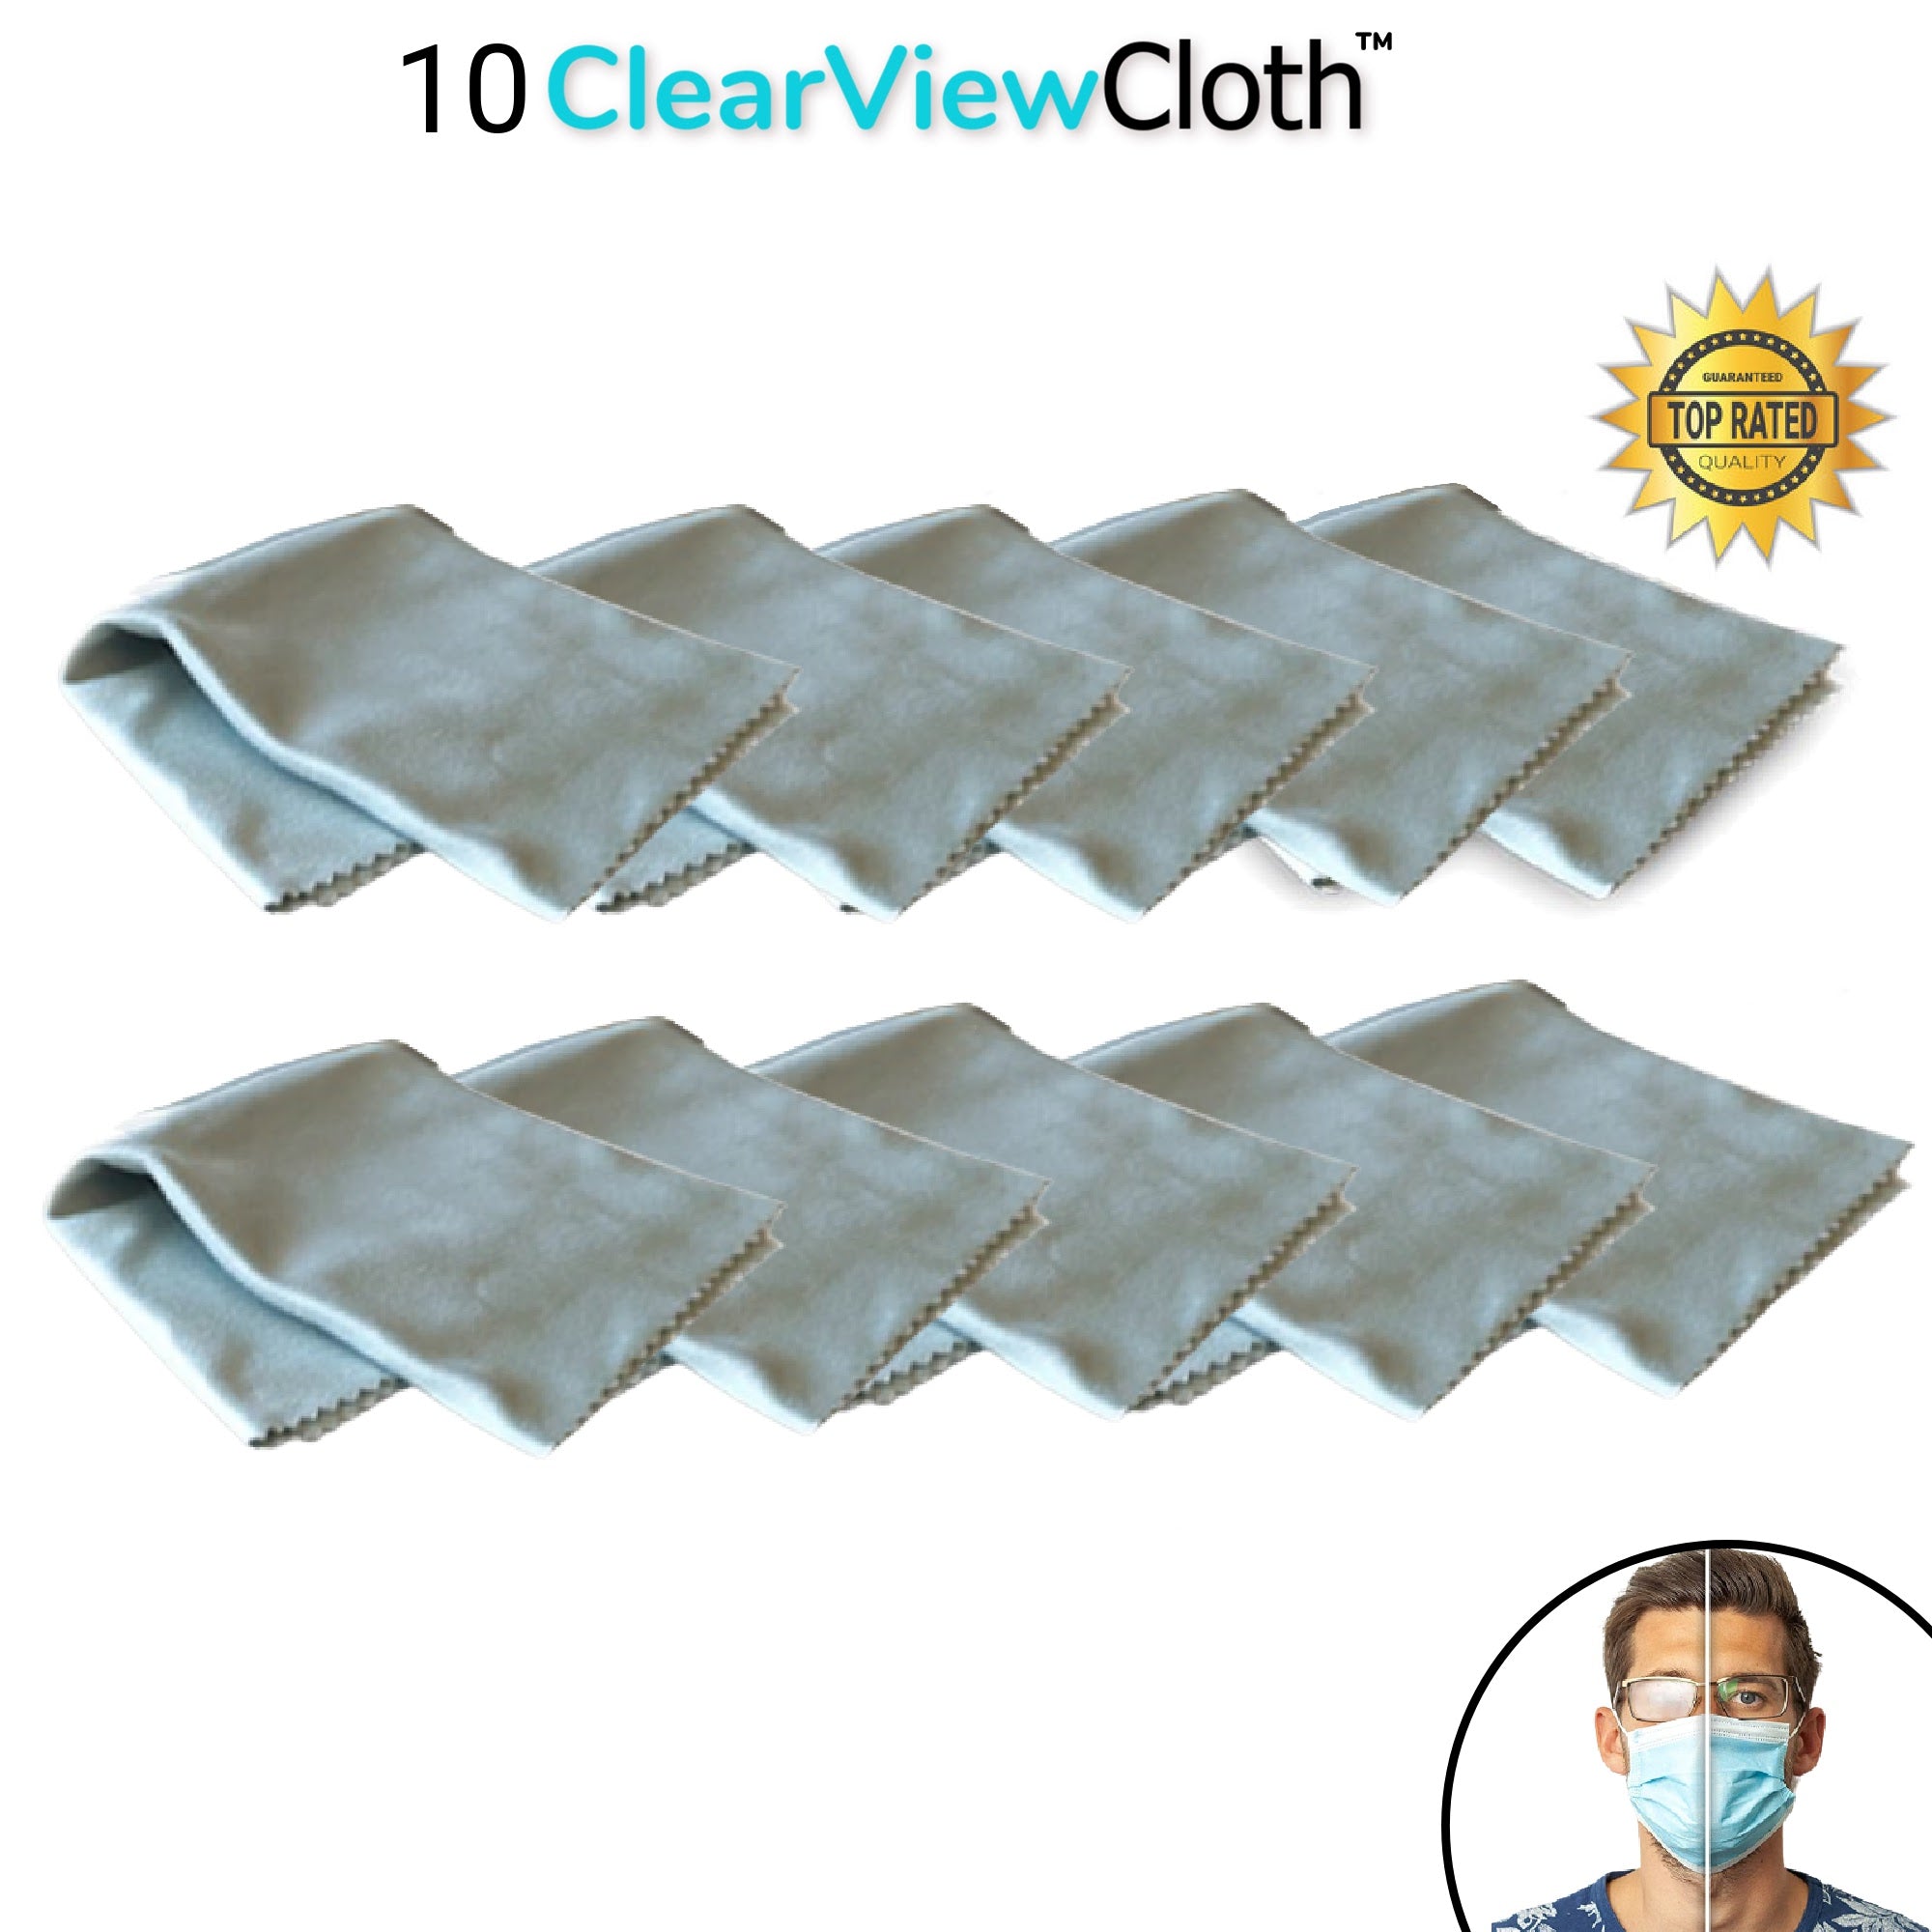 10 ClearView Cloth™ - Premium Anti-Fog Lens Cloth